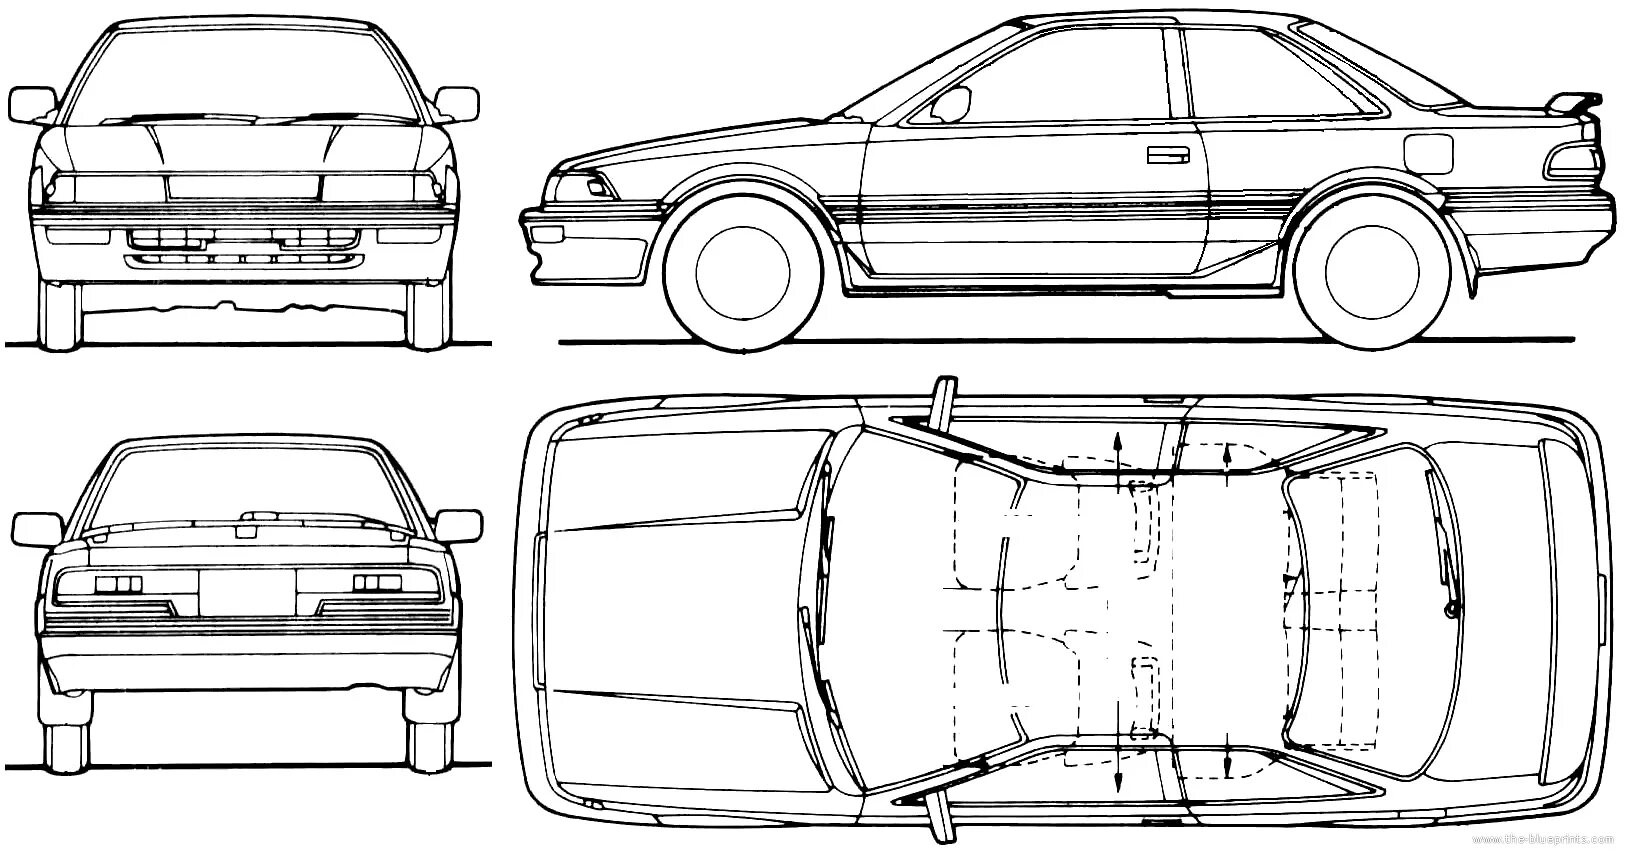 Toyota Corolla ae86 чертеж. Toyota Corolla ae86 Blueprint. Toyota ae86 Blueprint. Чертеж Toyota Corolla ae86 Levin. Размеры тойота спринтер